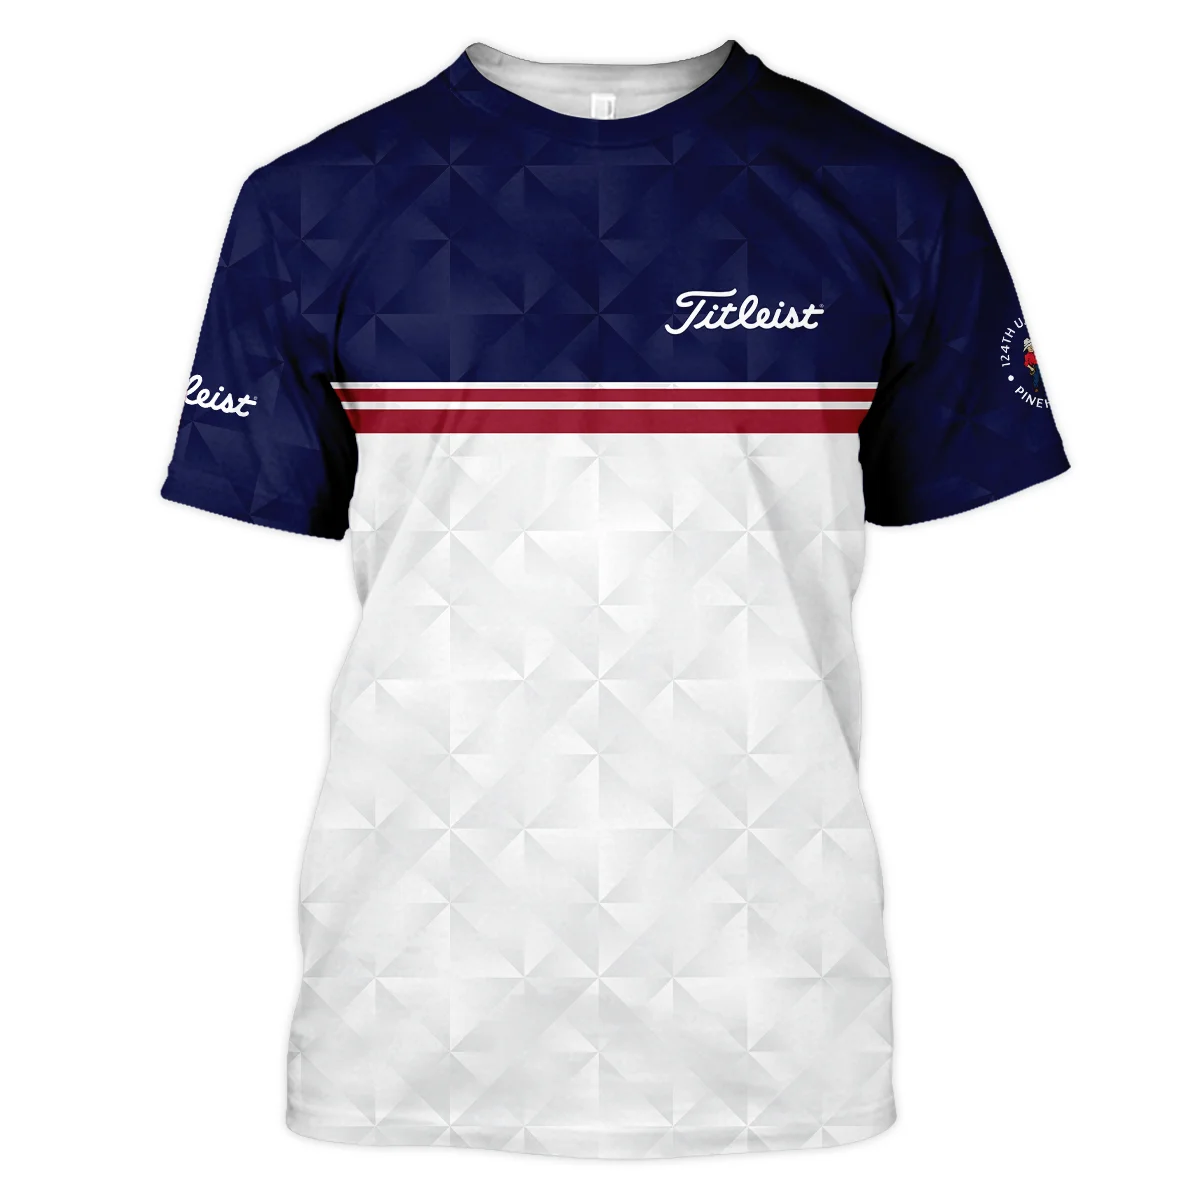 Golf Sport 124th U.S. Open Pinehurst Titleist Unisex T-Shirt Dark Blue White Abstract Geometric Triangles All Over Print T-Shirt